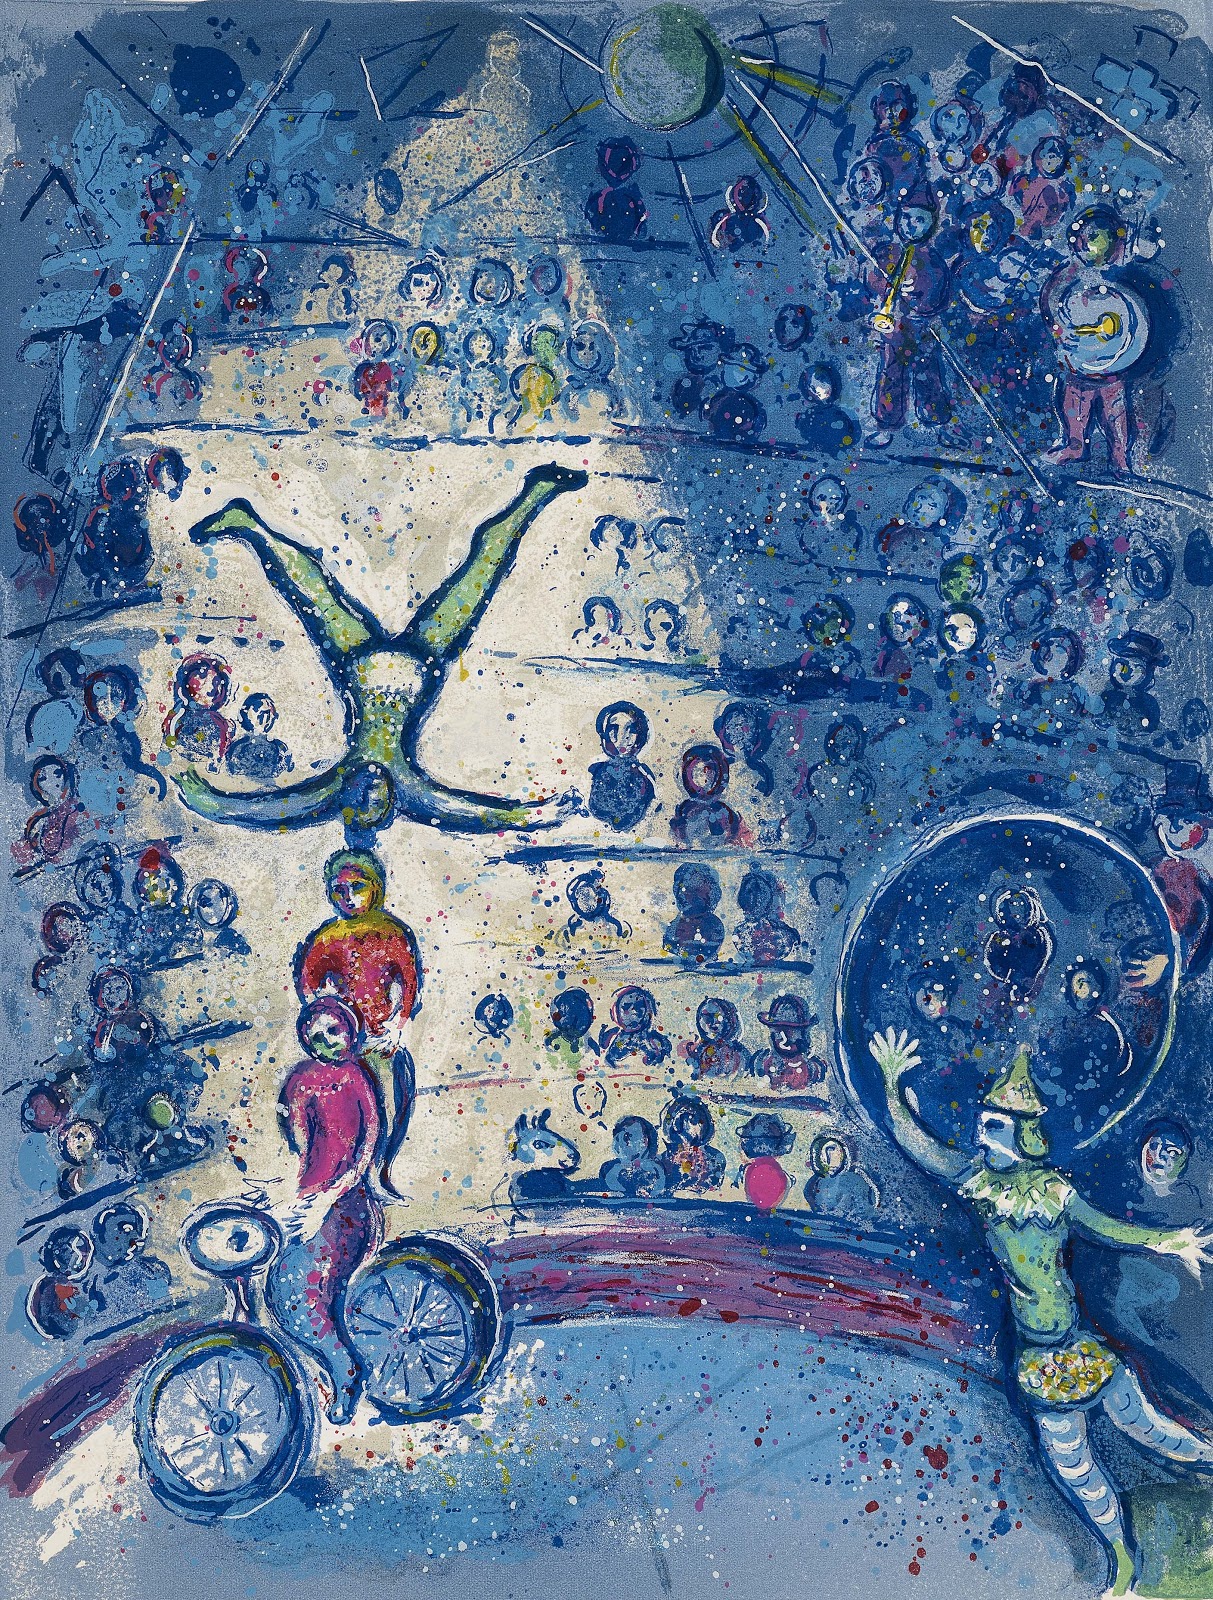 Marc+Chagall-1887-1985 (59).jpg